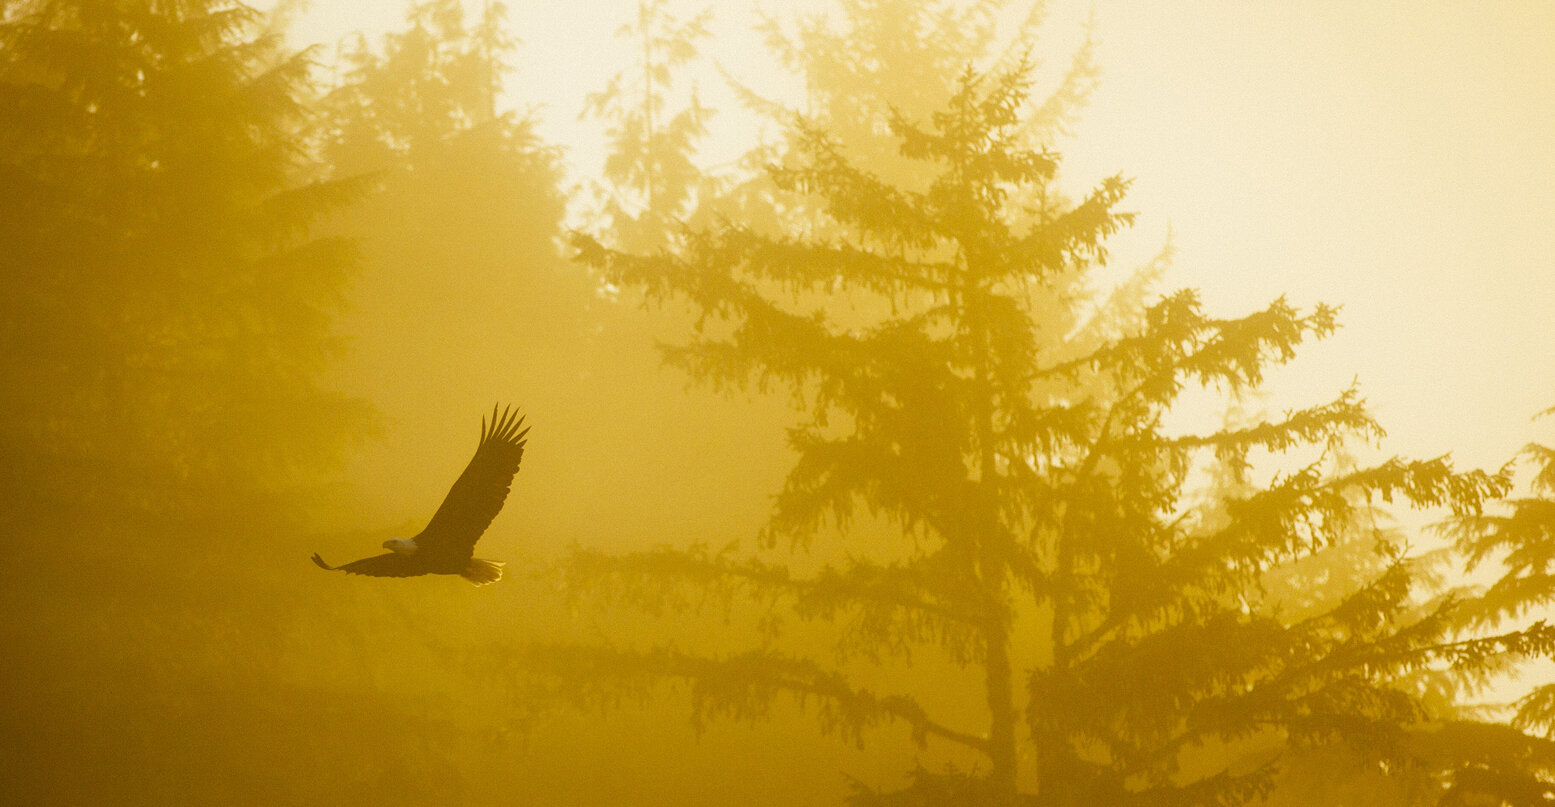 Eagle soaring in the morning sun